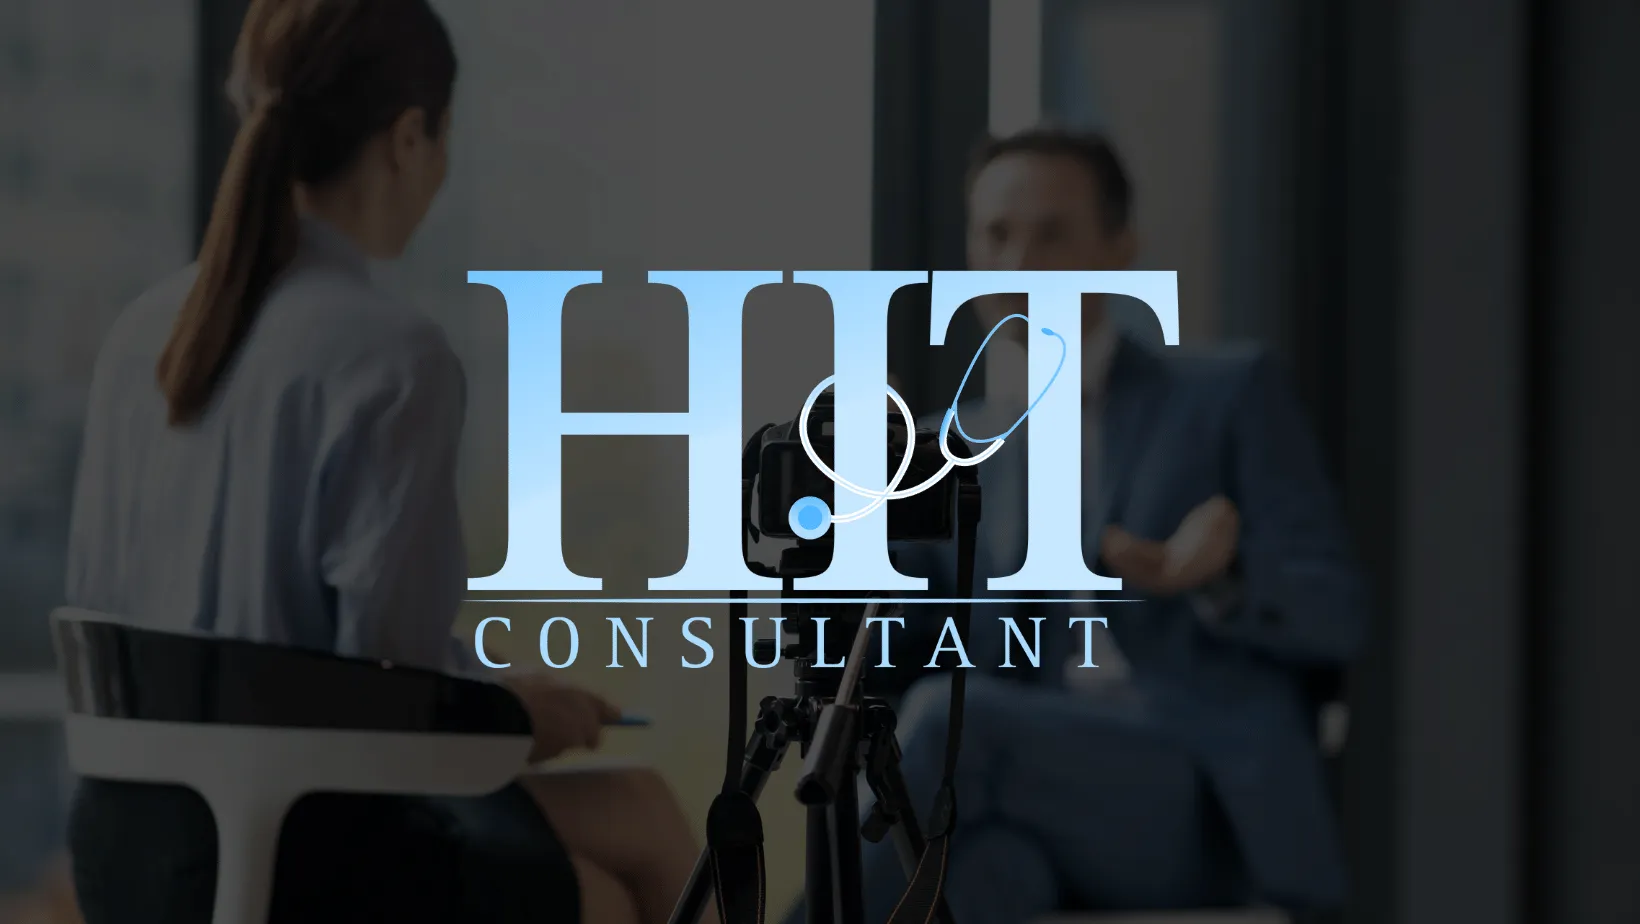 White HIT consultant logo over a dark background.